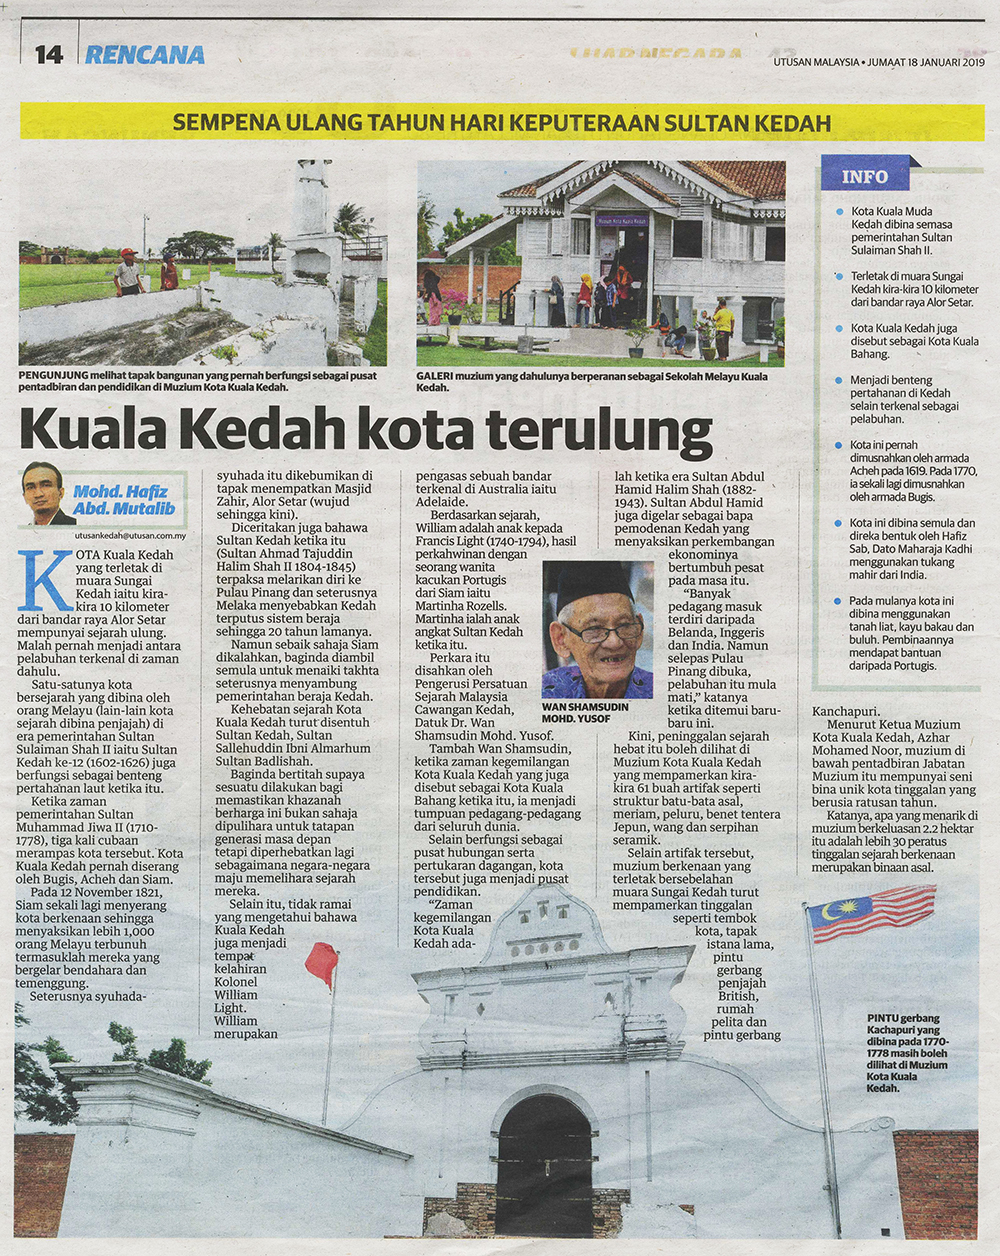 Kuala Kedah Kota Terulung